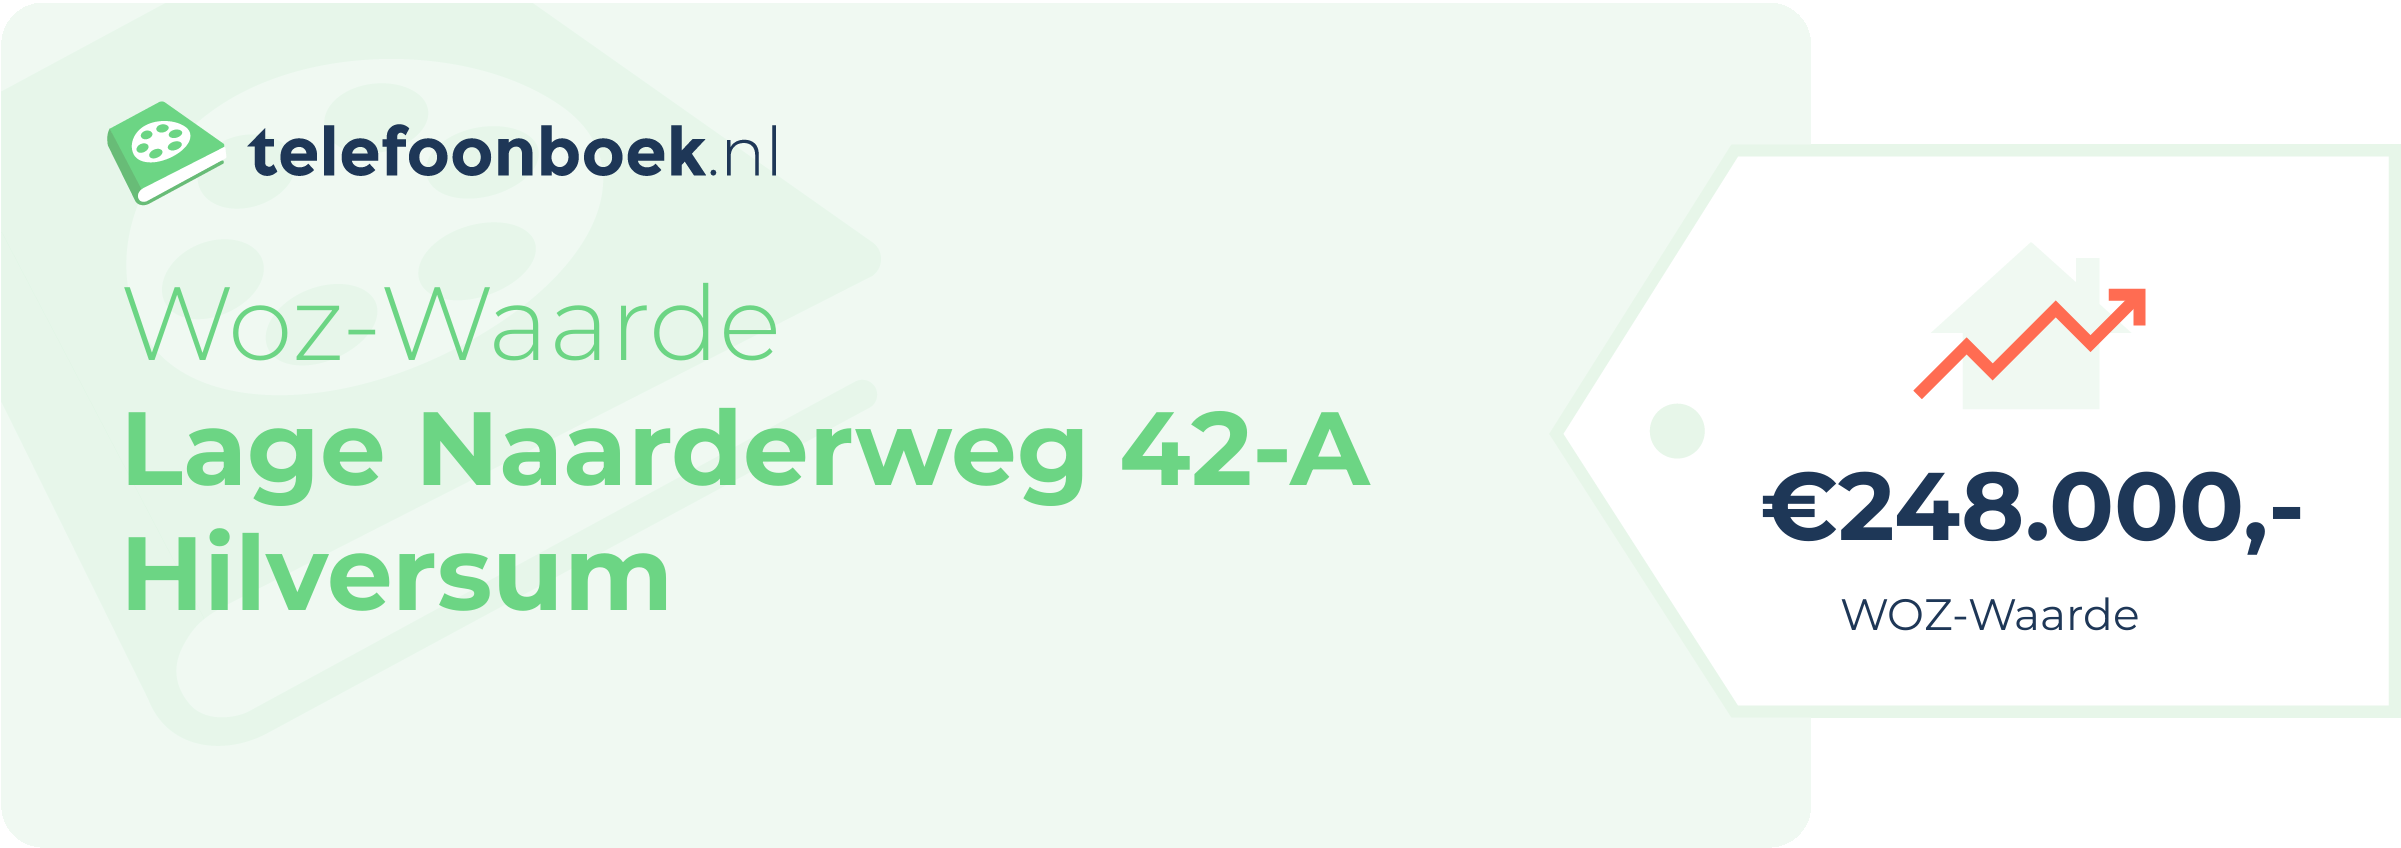 WOZ-waarde Lage Naarderweg 42-A Hilversum